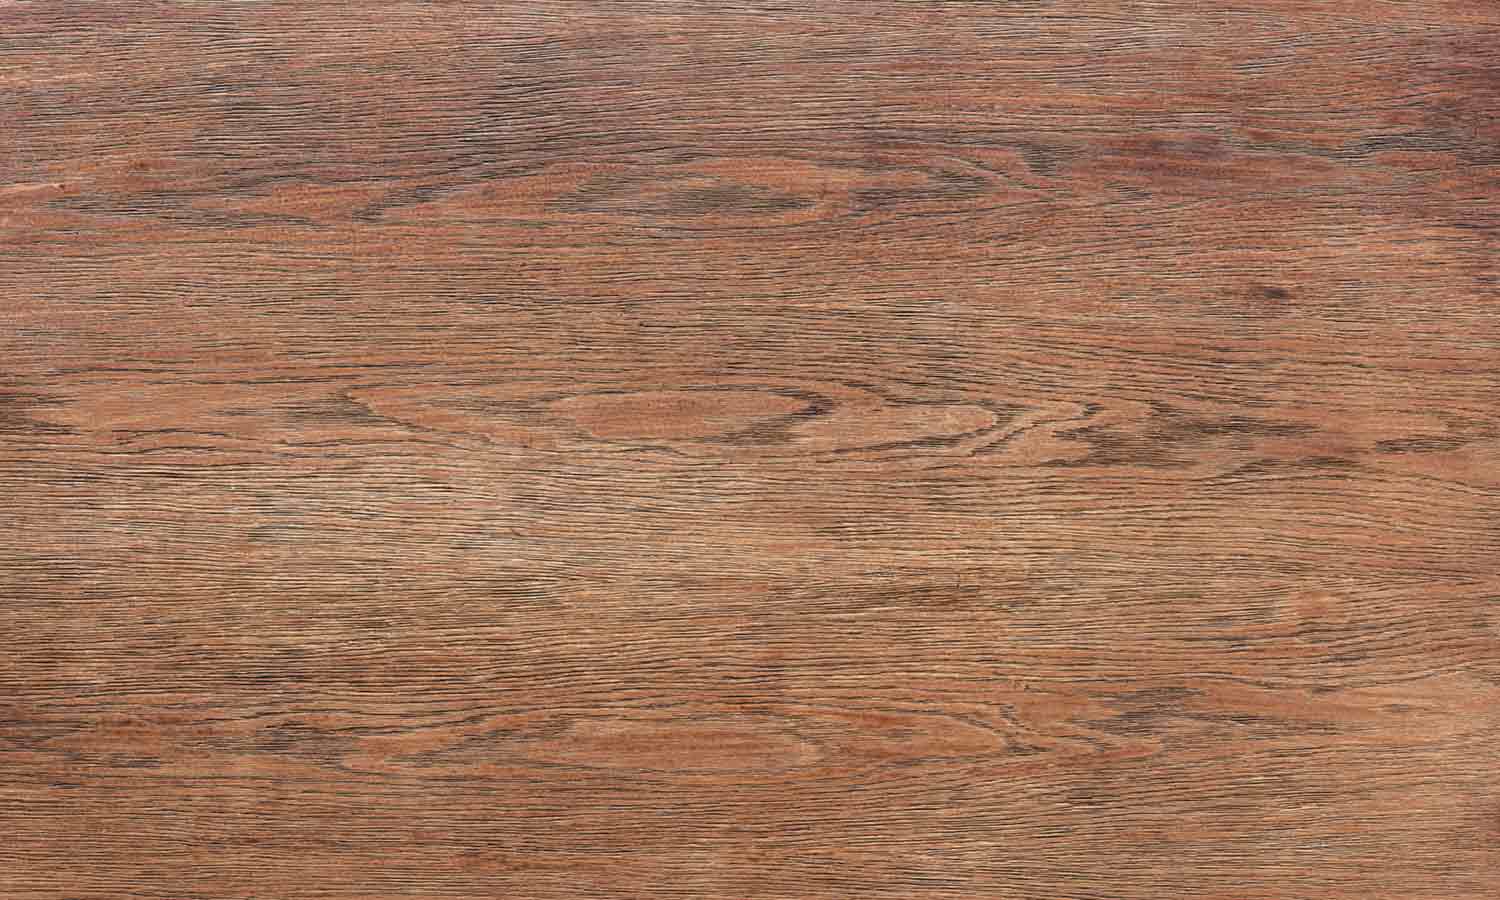 Zidne obloge panel Drvo tekstura - WA020